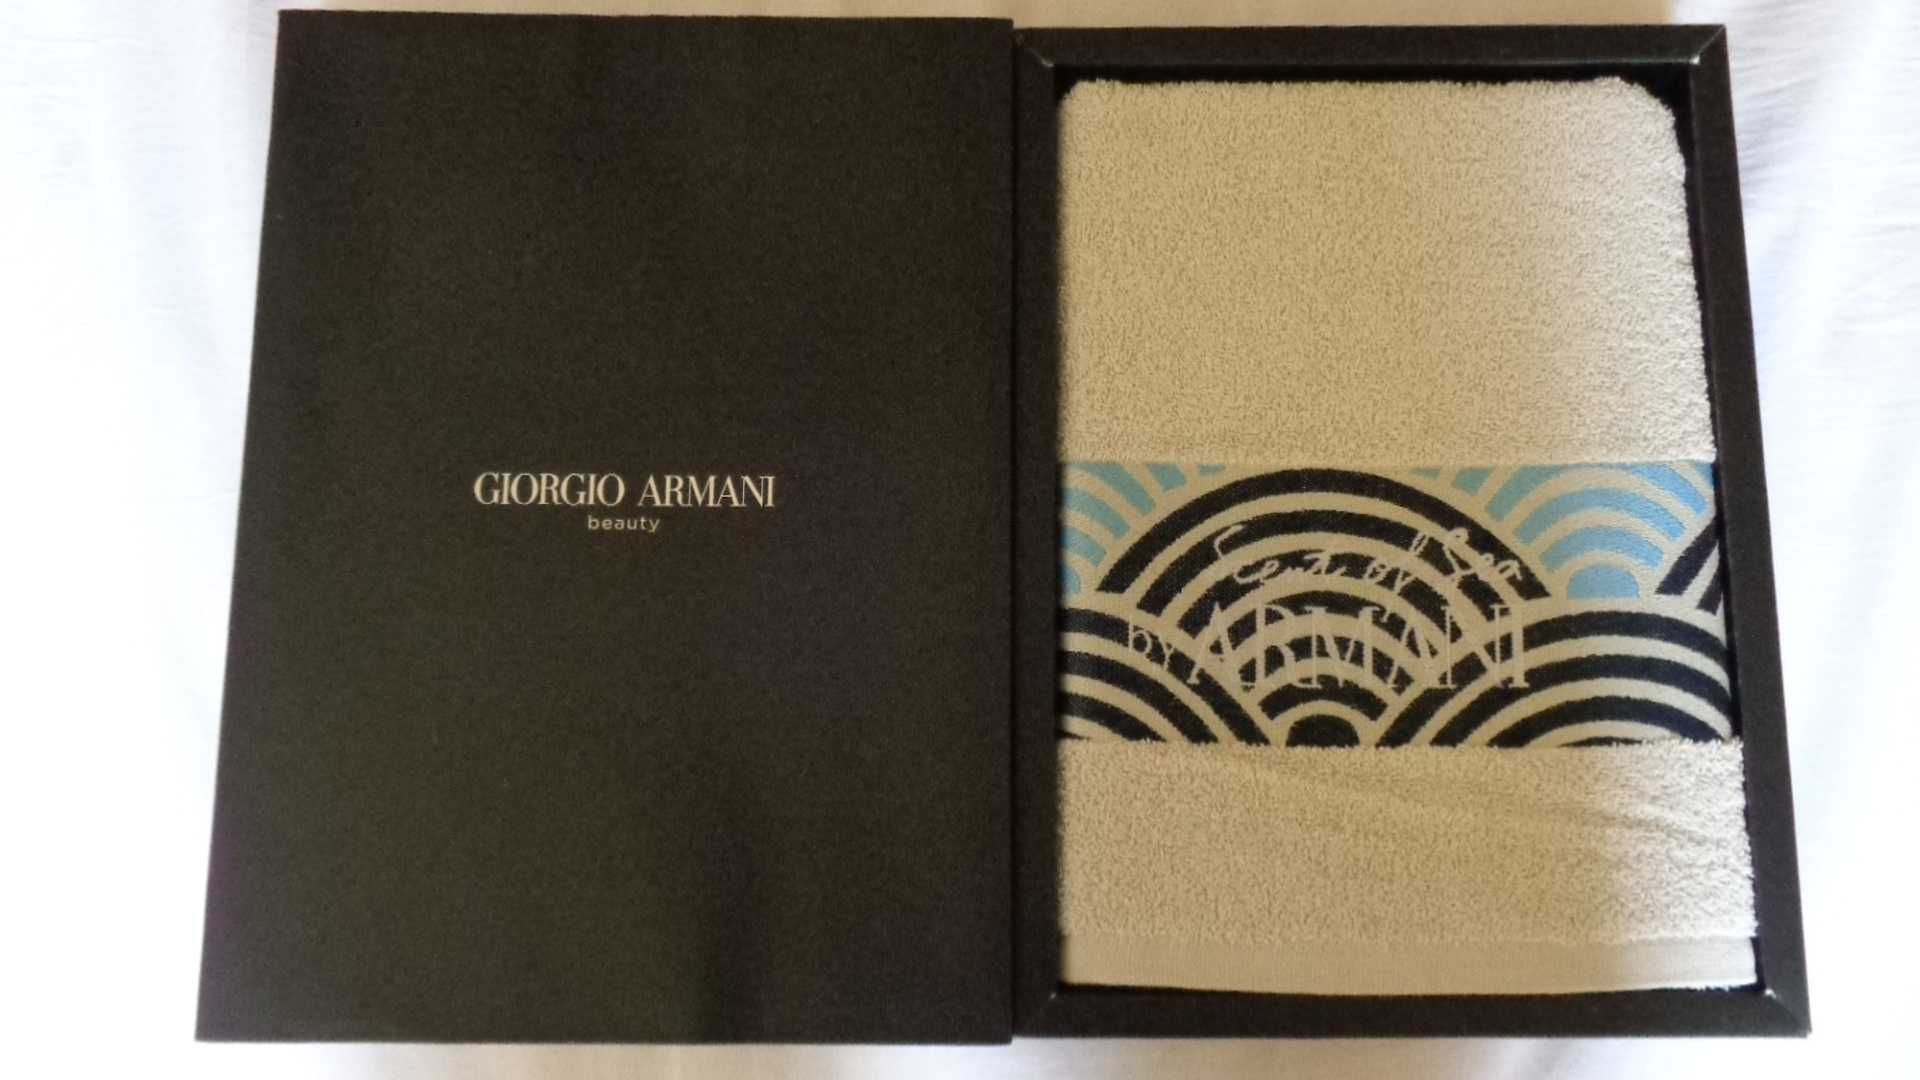 Пляжное полотенце Giorgio Armani Beauty–Italian Sun.0RIGINAL.NEW